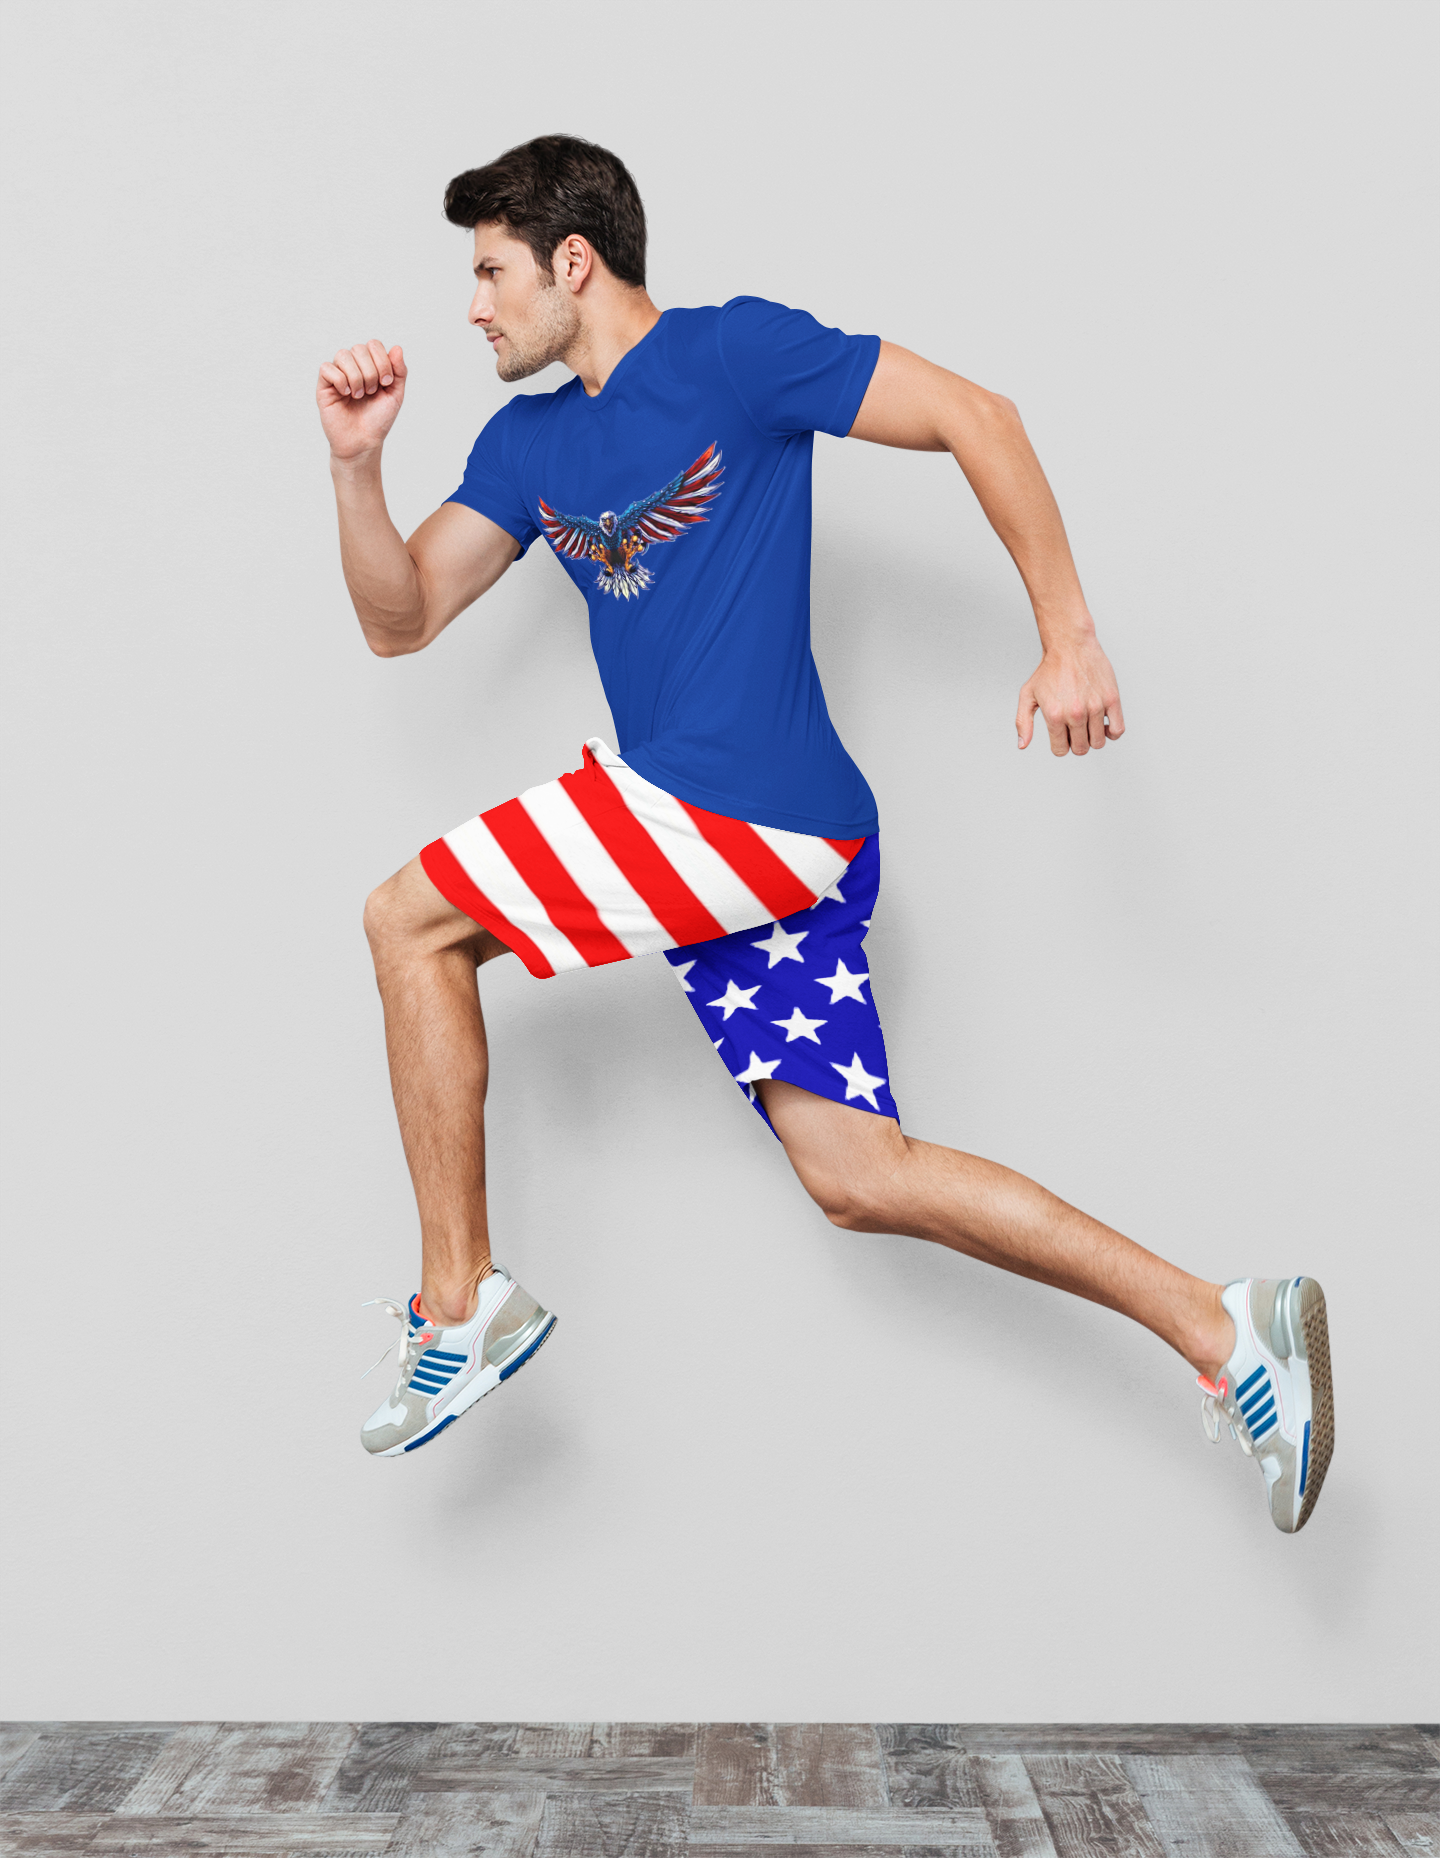 American Flag Men's Mid-Length Shorts